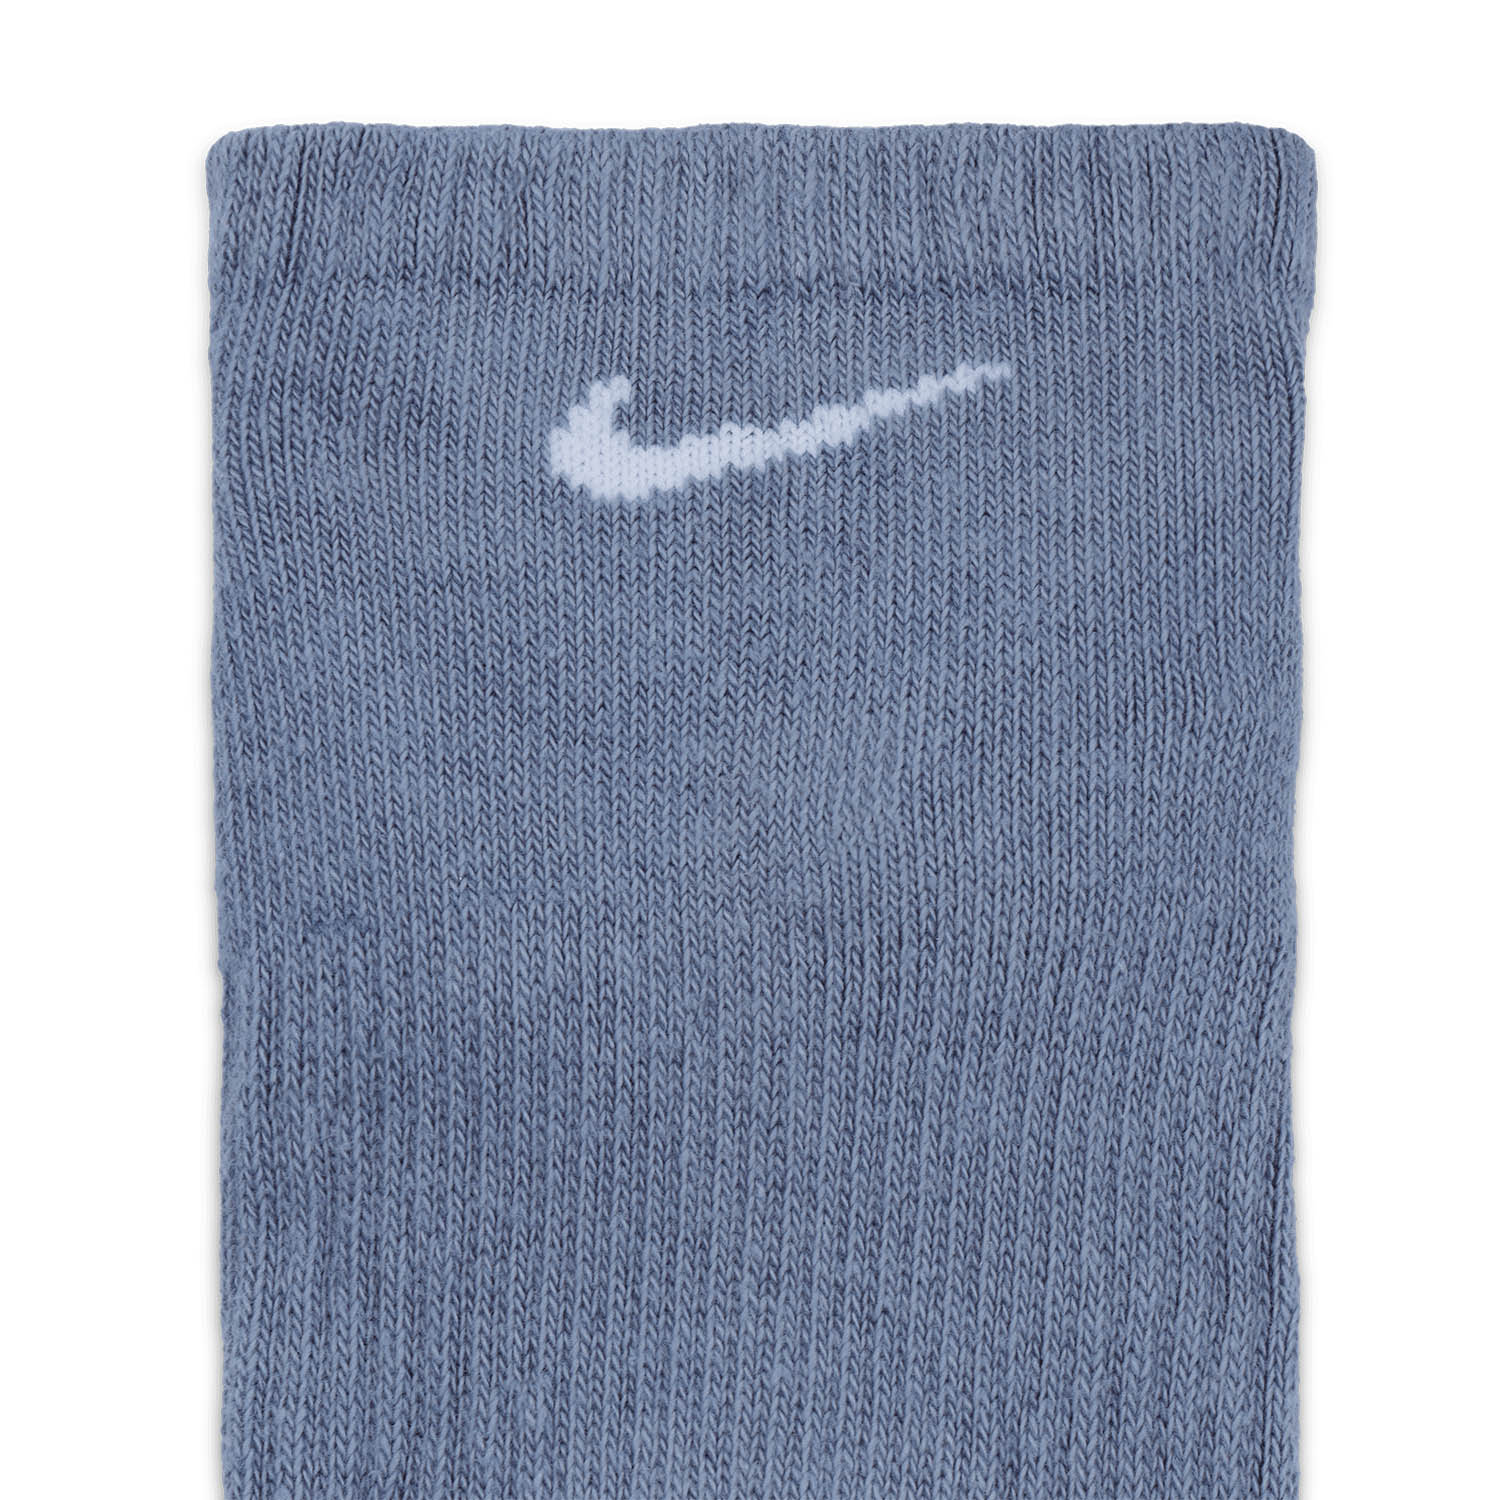 Nike Everyday Plus Cushion x 3 Socks - Multi Color